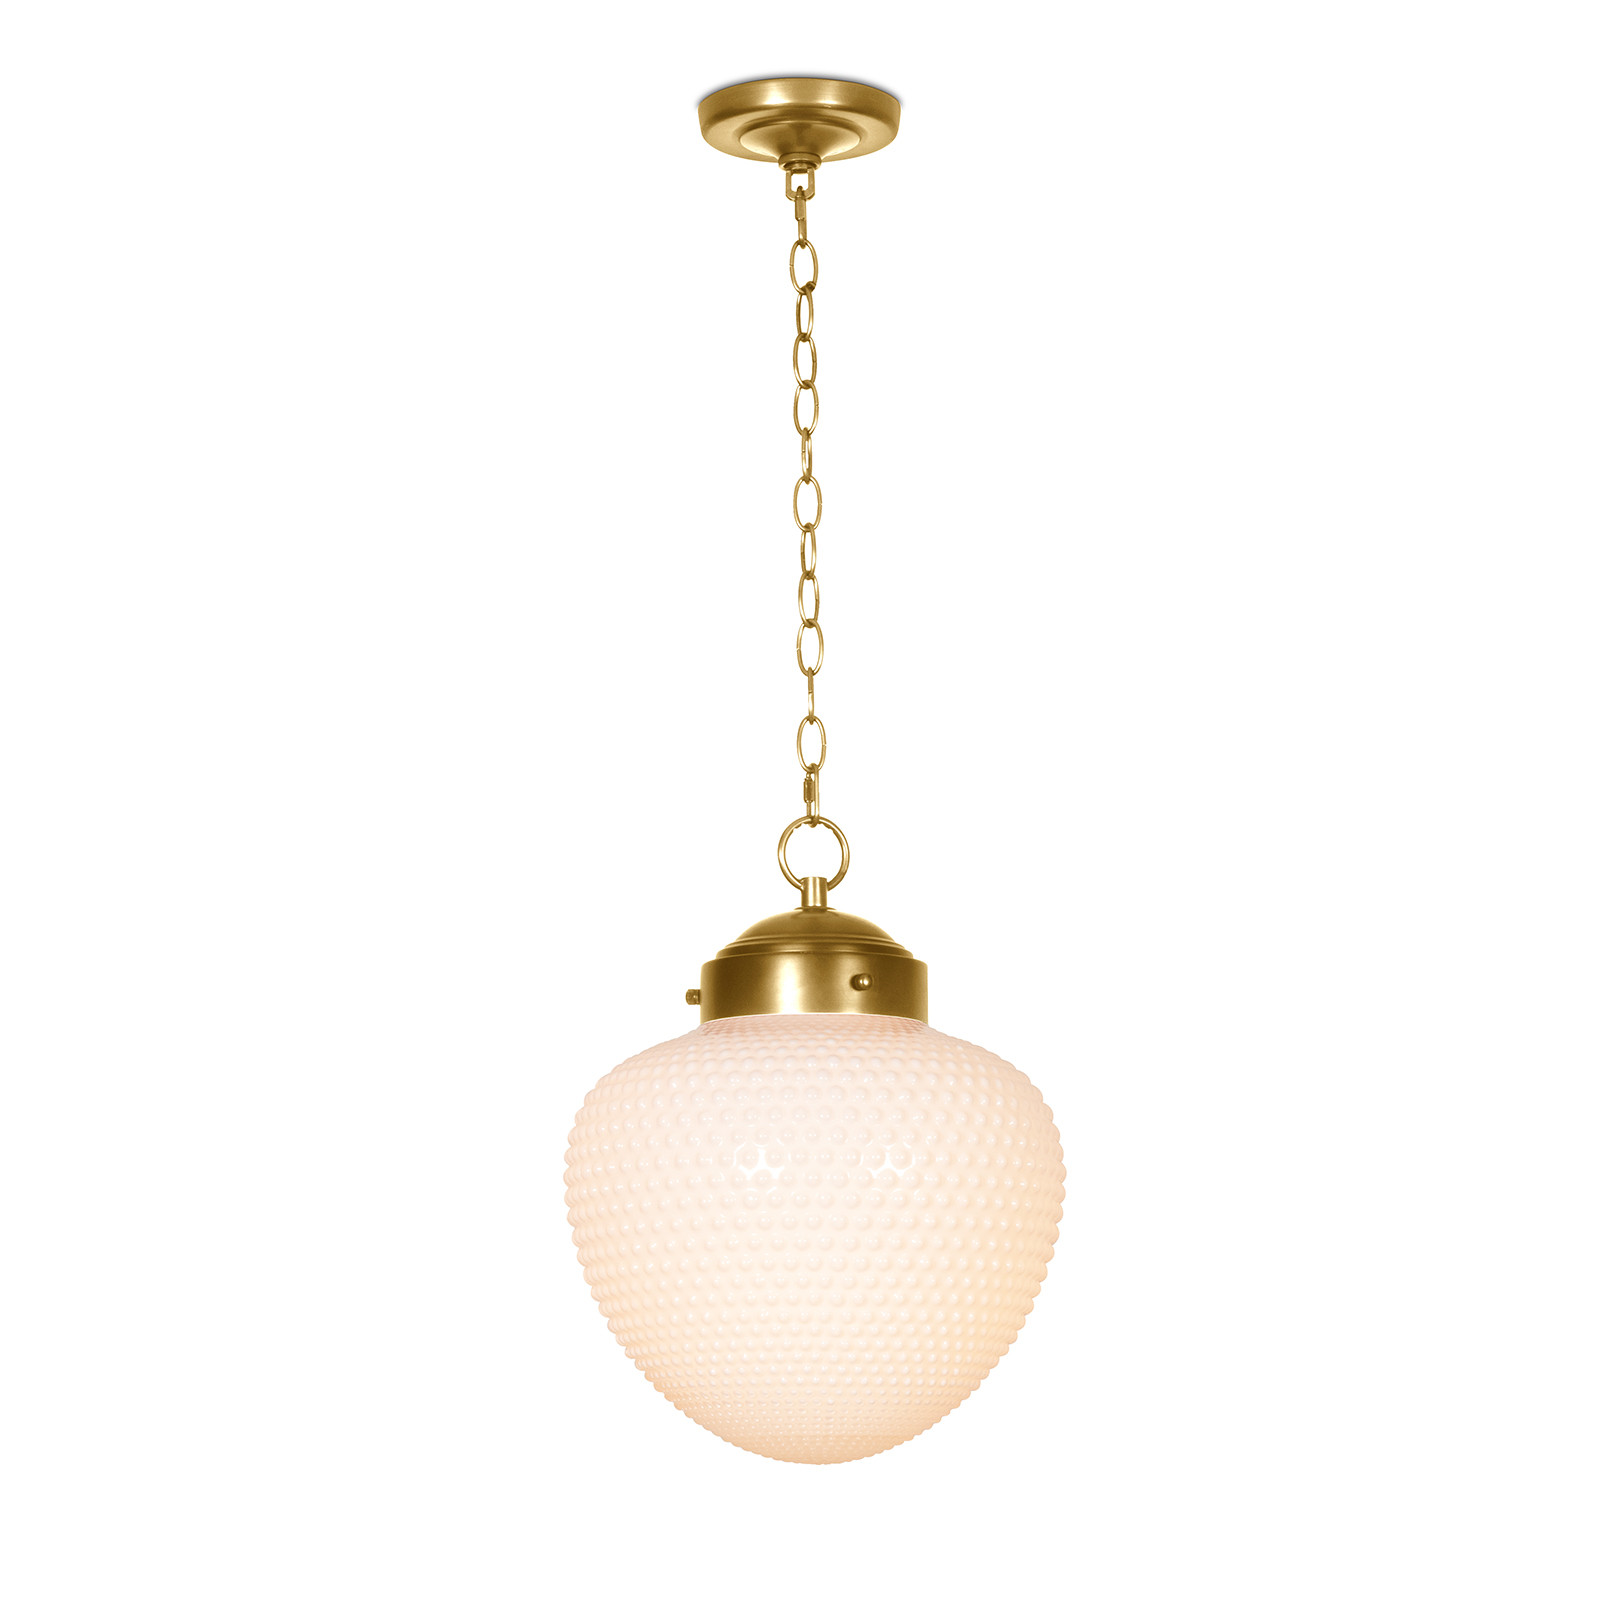 Molten glass chandelier with natural brass